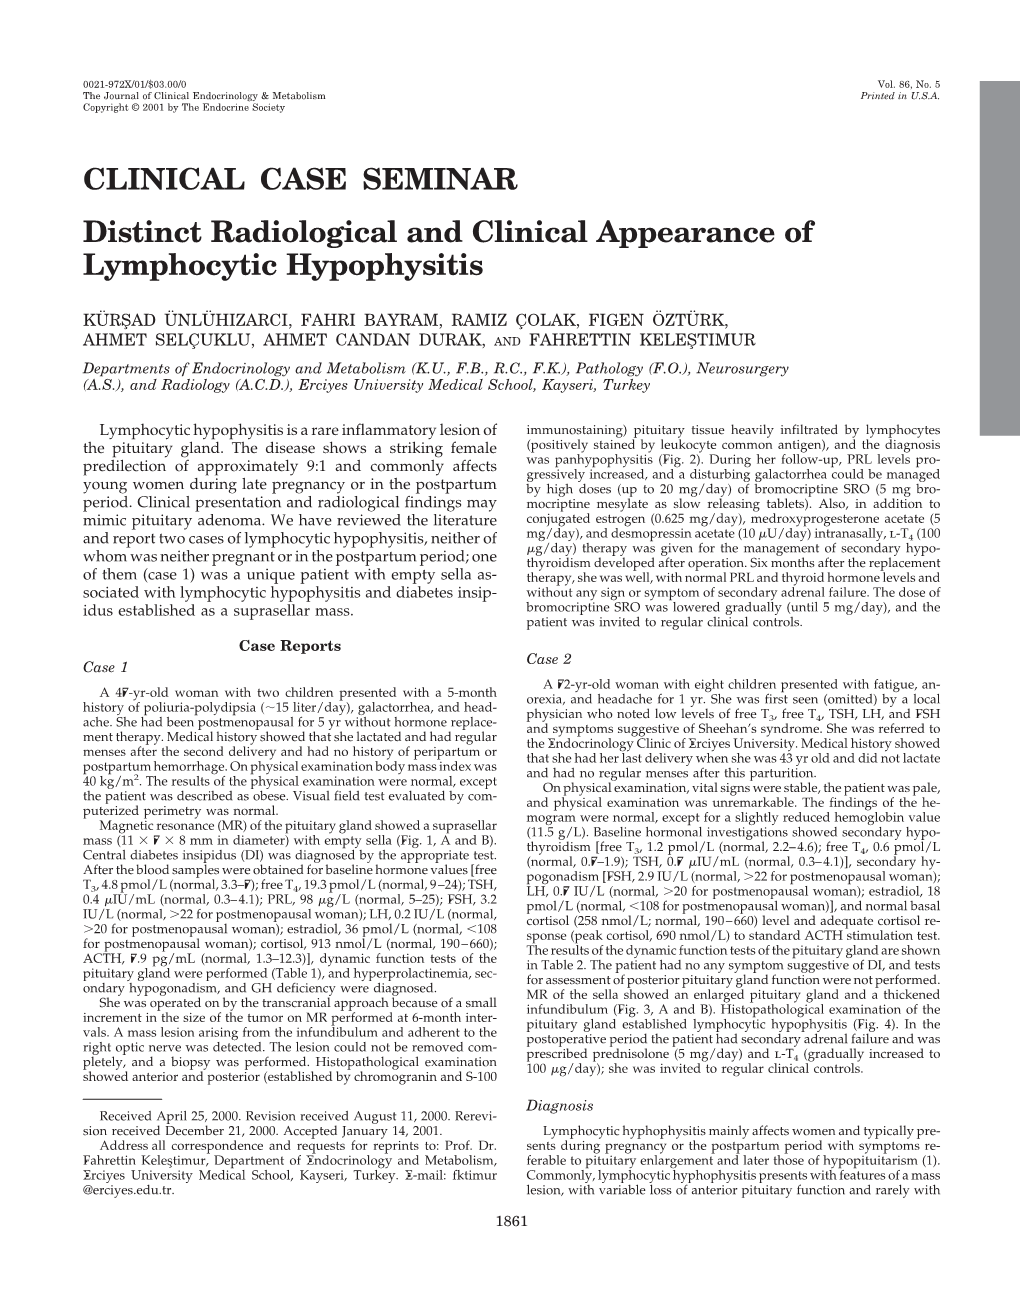 CLINICAL CASE SEMINAR Distinct Radiological and Clinical Appearance of Lymphocytic Hypophysitis